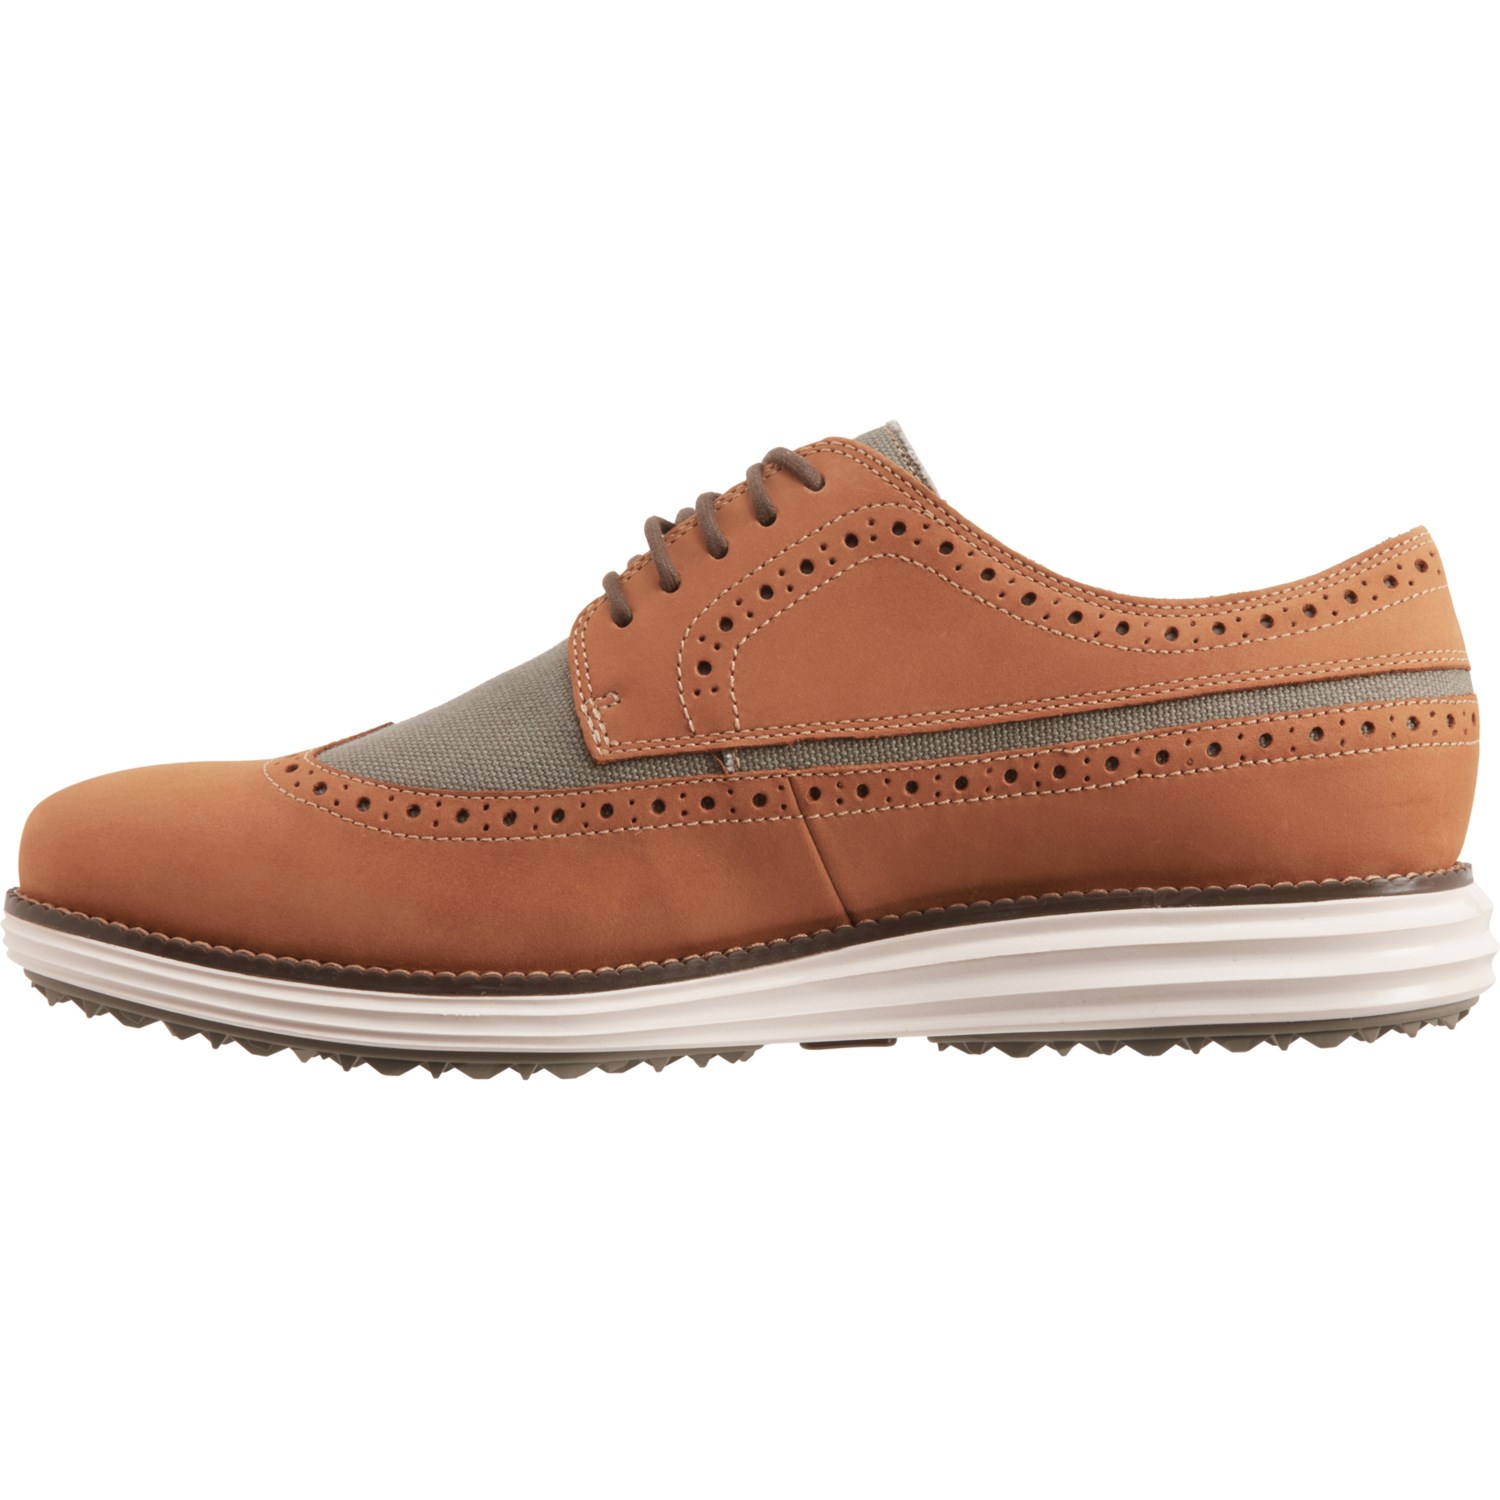 Cole Haan OriginalGrand Wingtip Oxford Golf Shoes (For Men) - Save 57%